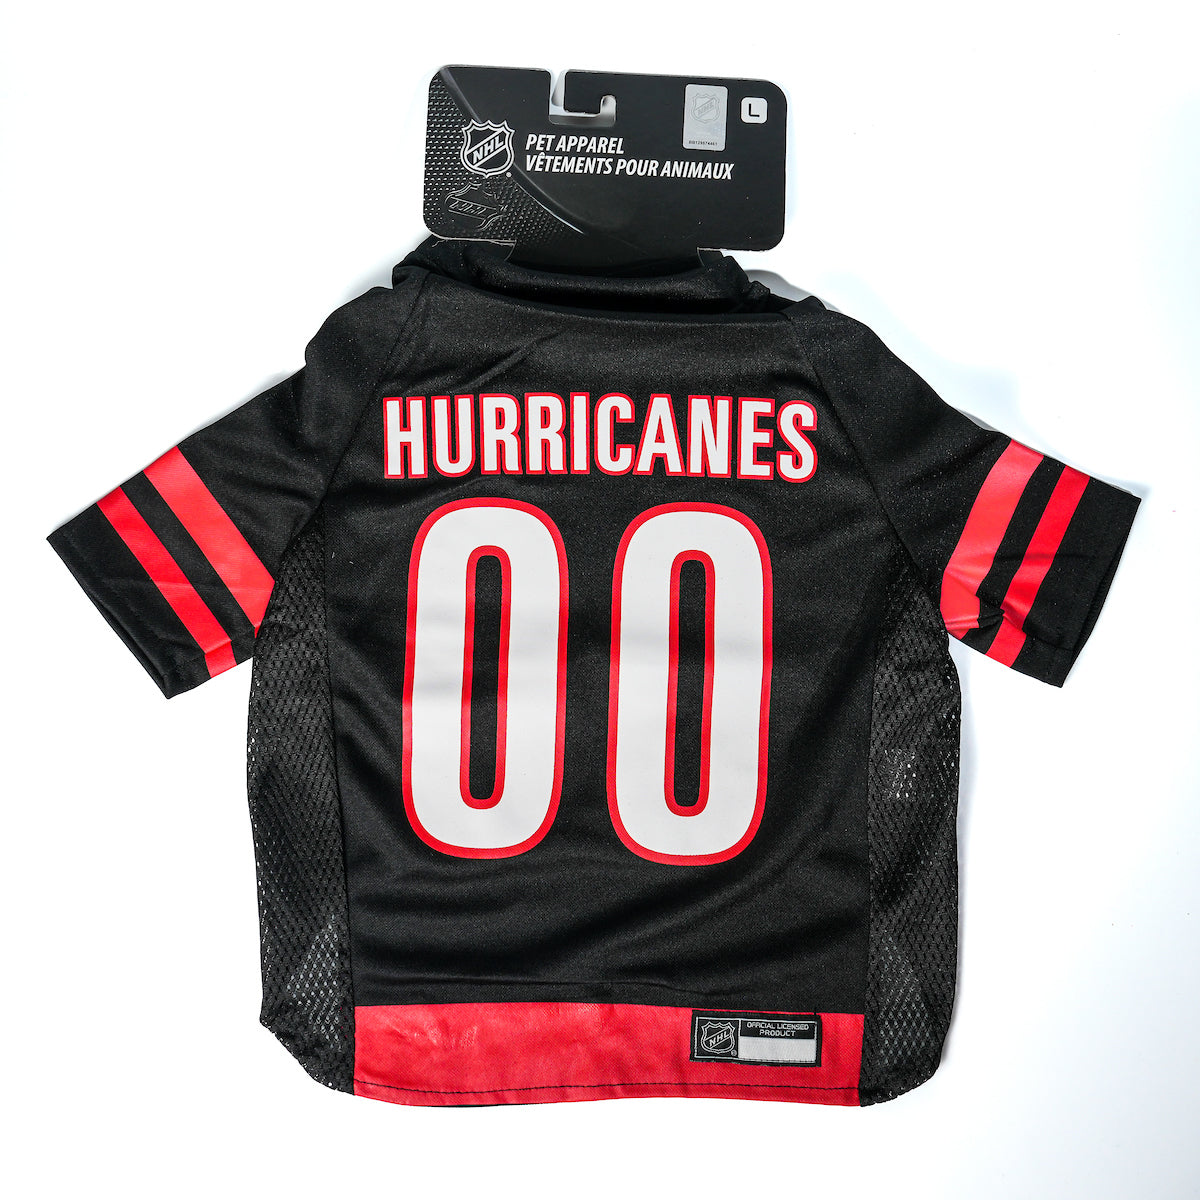 Carolina Hurricanes Gear, Hurricanes Jerseys, Carolina Pro Shop